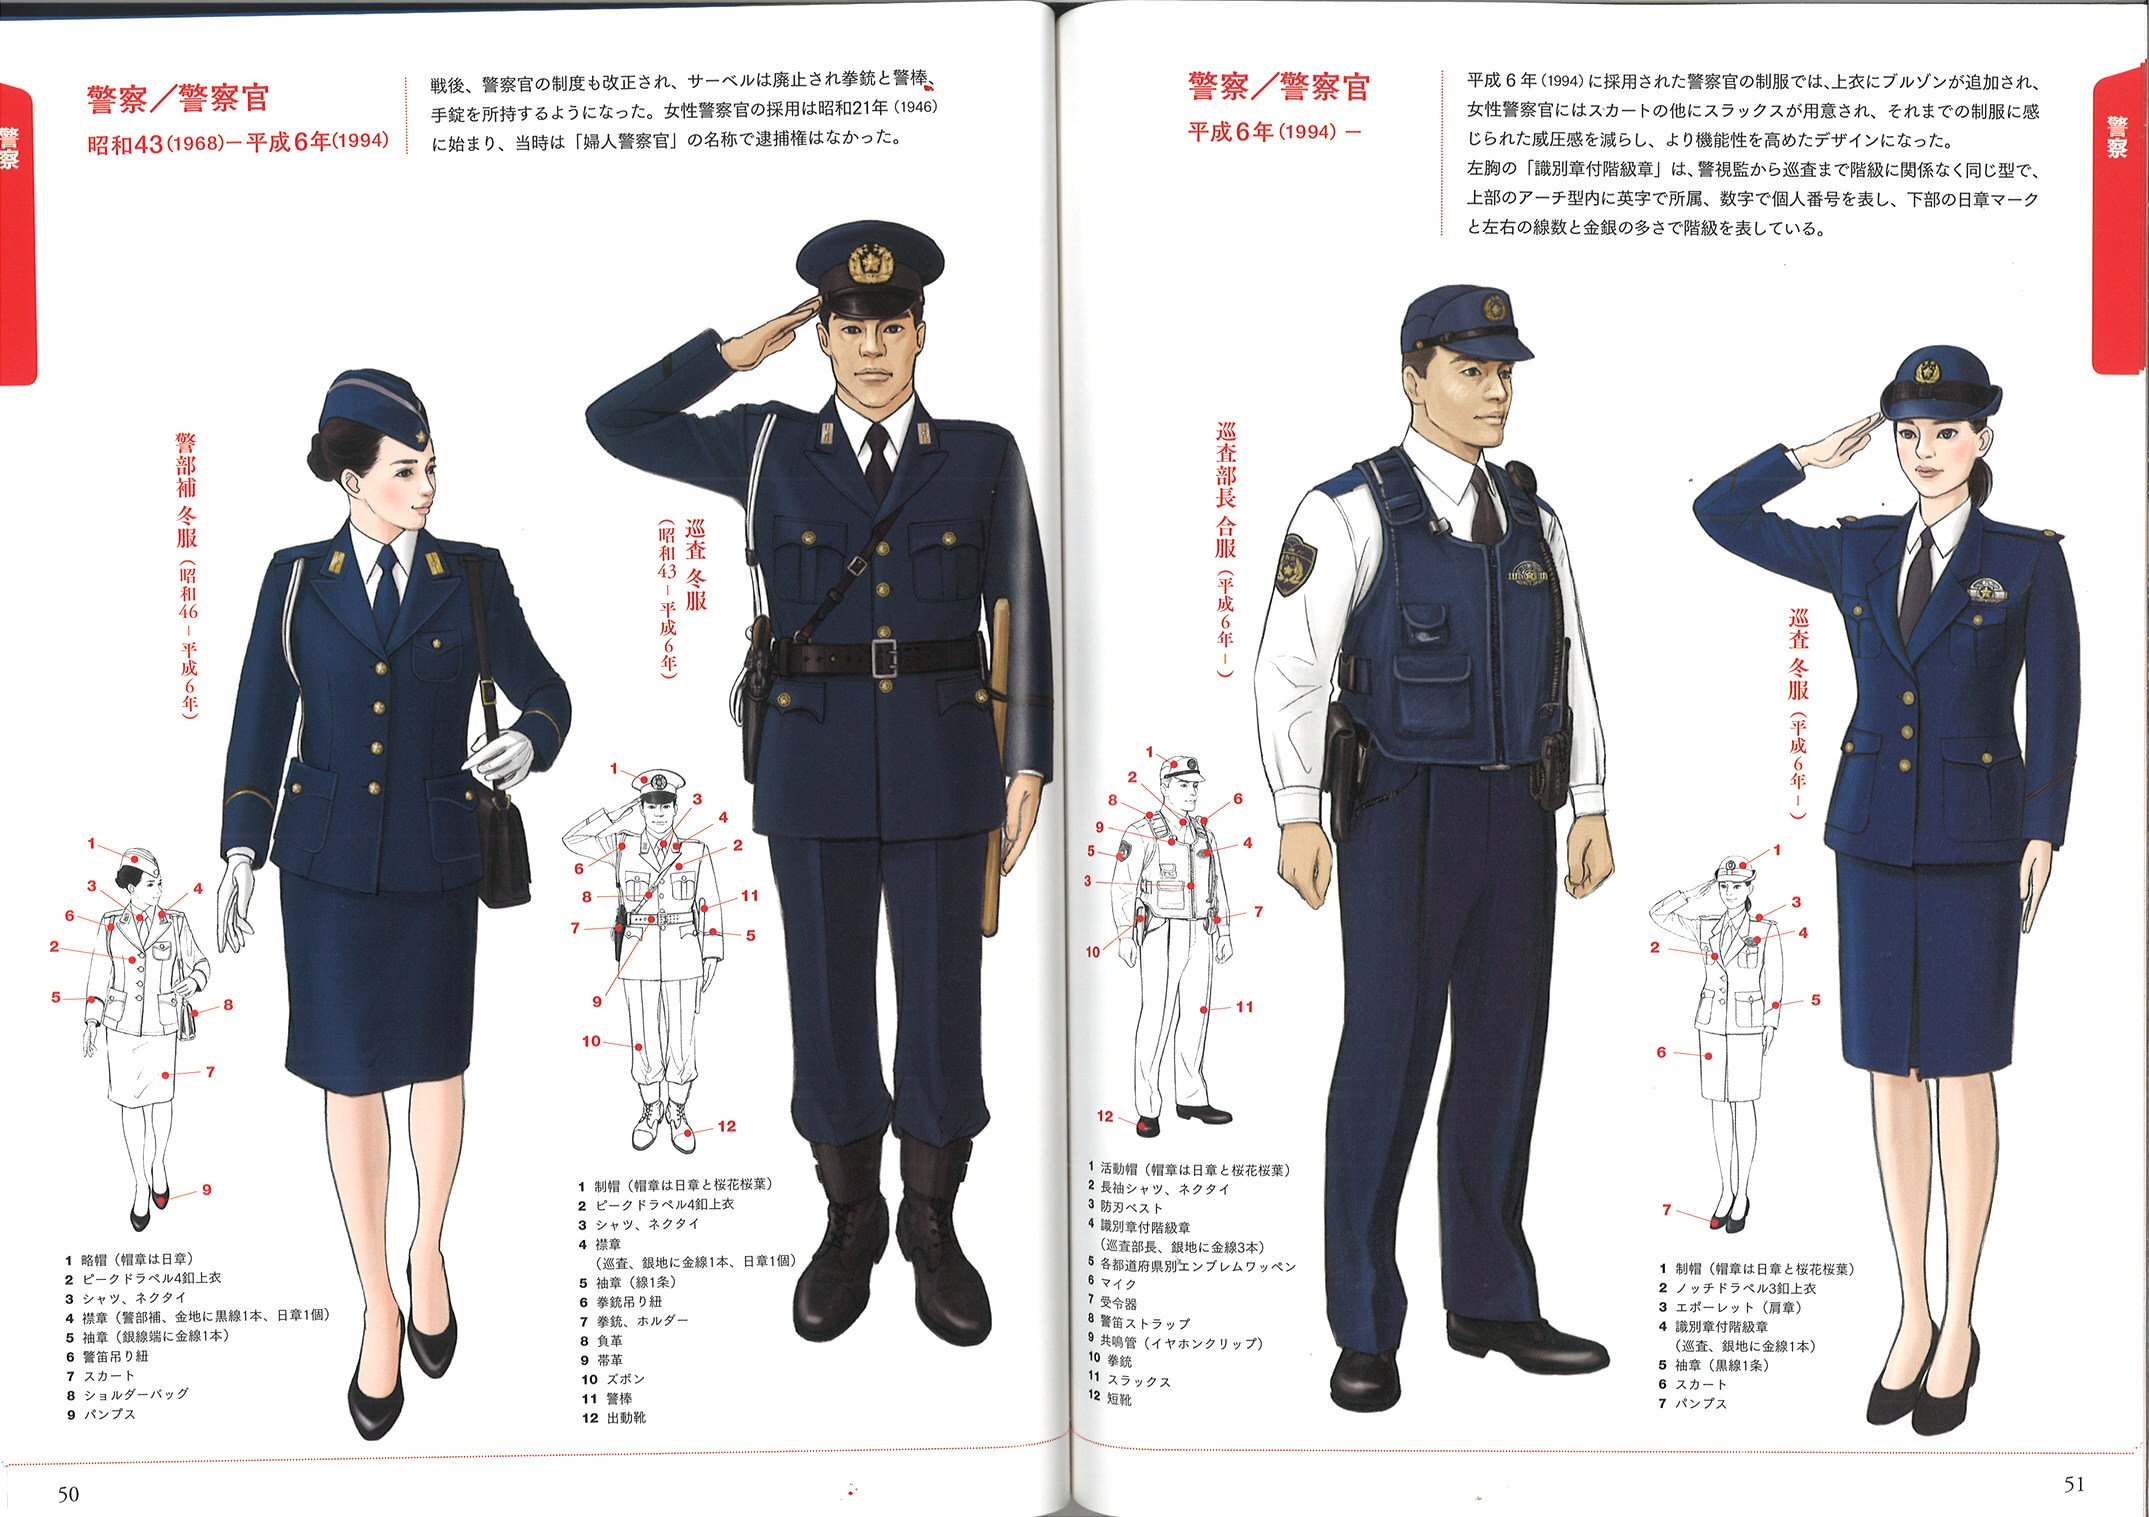 Twitter 上的青幻舎 日本の制服 警察制度の創成期から現在まで 警察階級章資料付 日本の仕事70職種イラスト180点 T Co Cdqrvt4i4p T Co Zhssmroyck Twitter